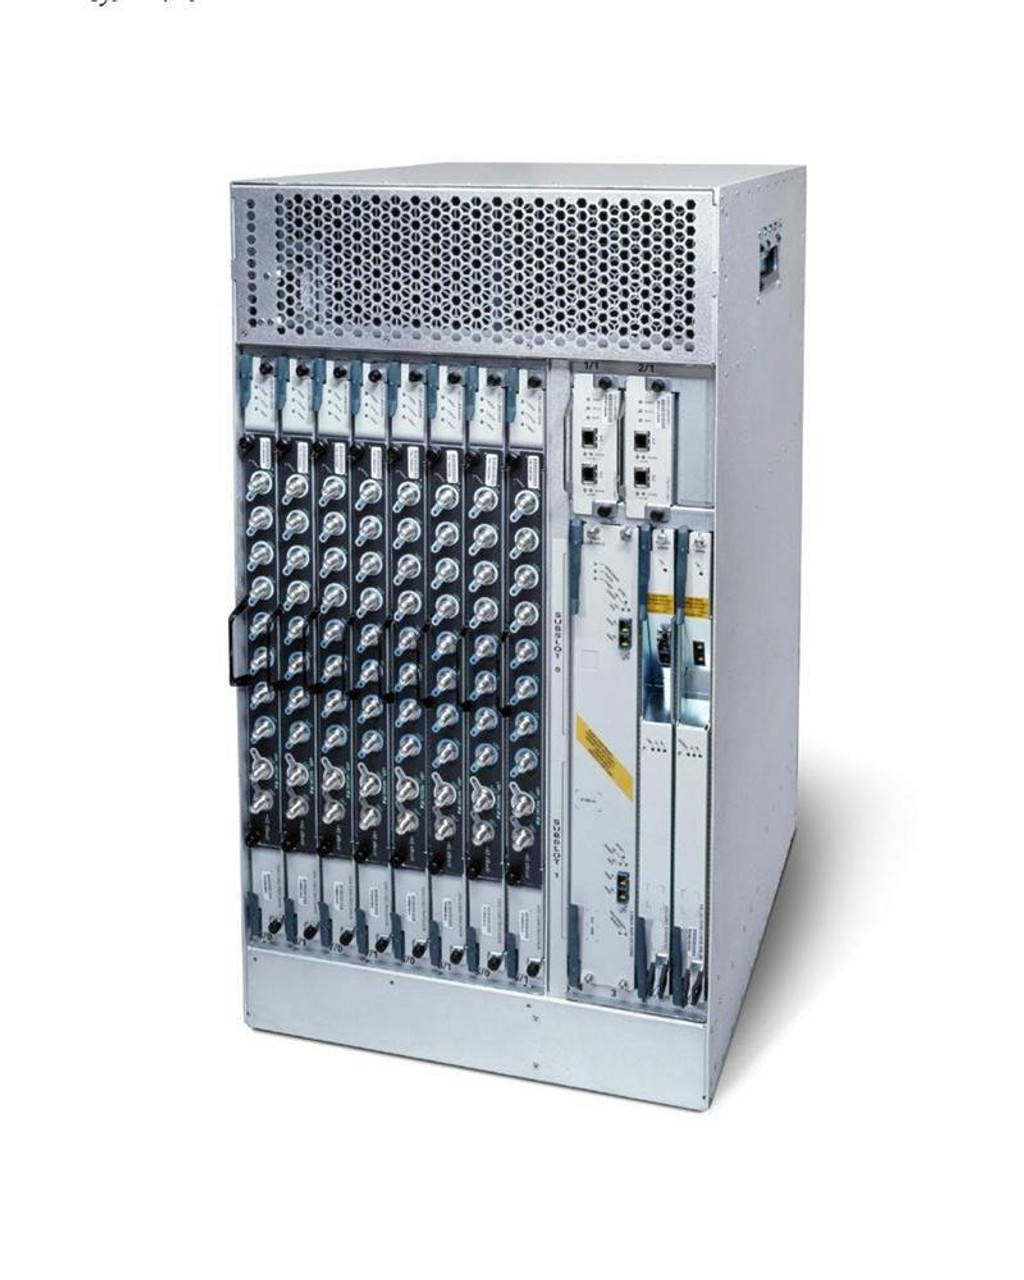 UBR10TCCT1RF Cisco Timing Communication and Control Plus Card for UBR10012 (Refurbished)